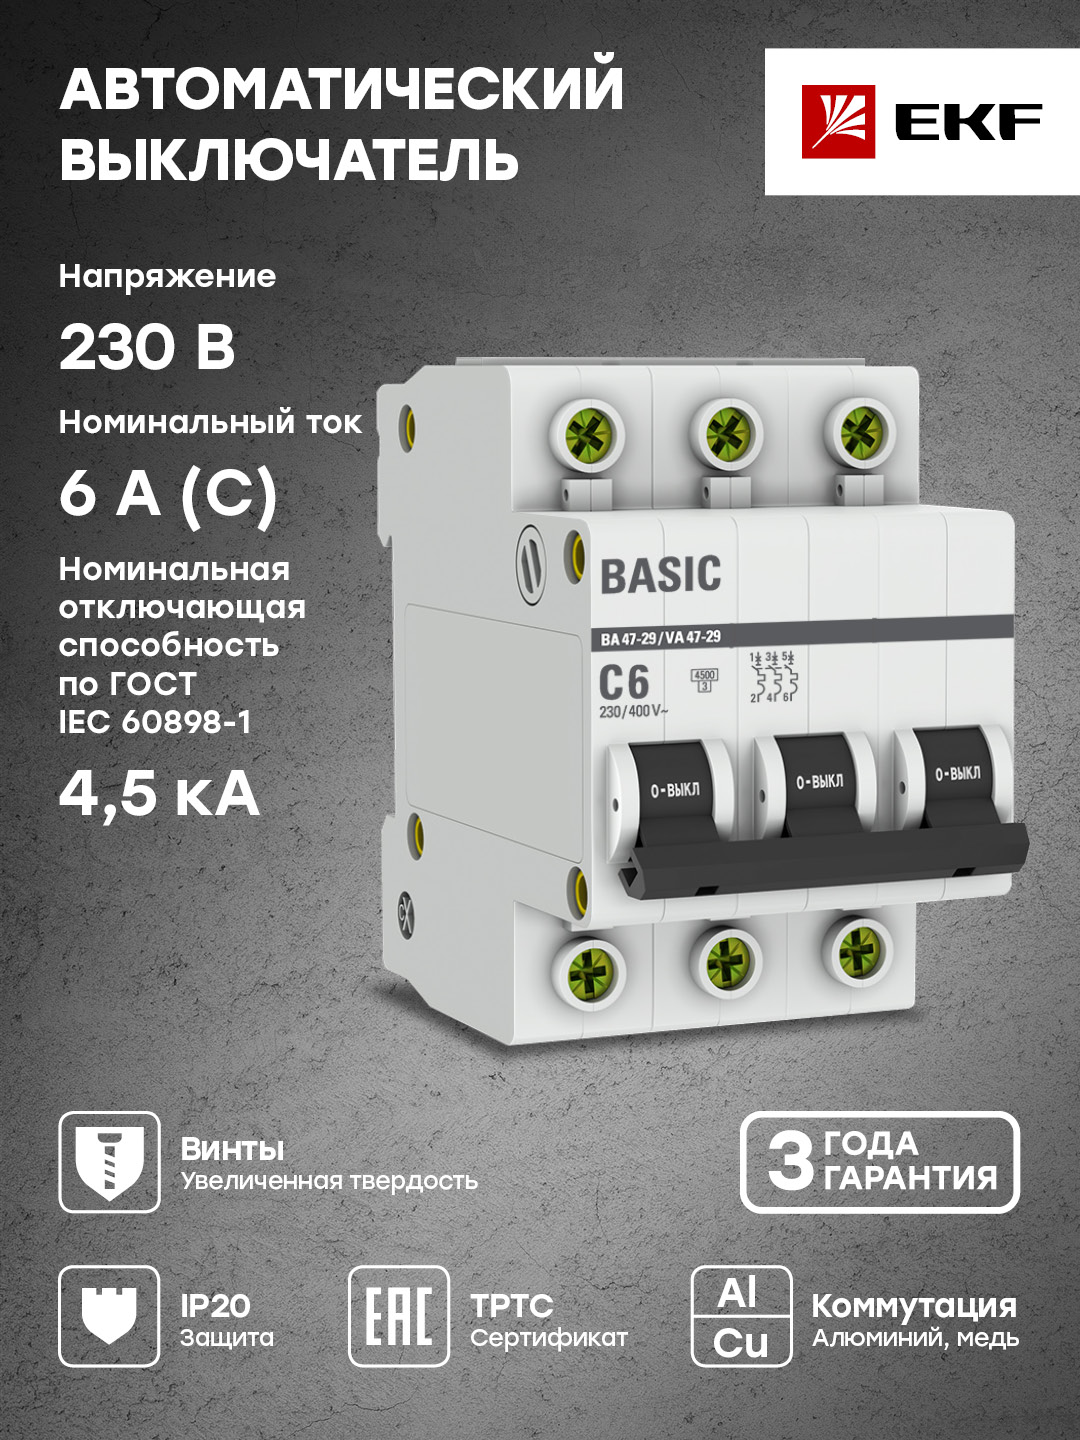 Автоматический выключатель EKF Basic 3P 6А (C) 4,5кА ВА 47-29 mcb4729-3-06C